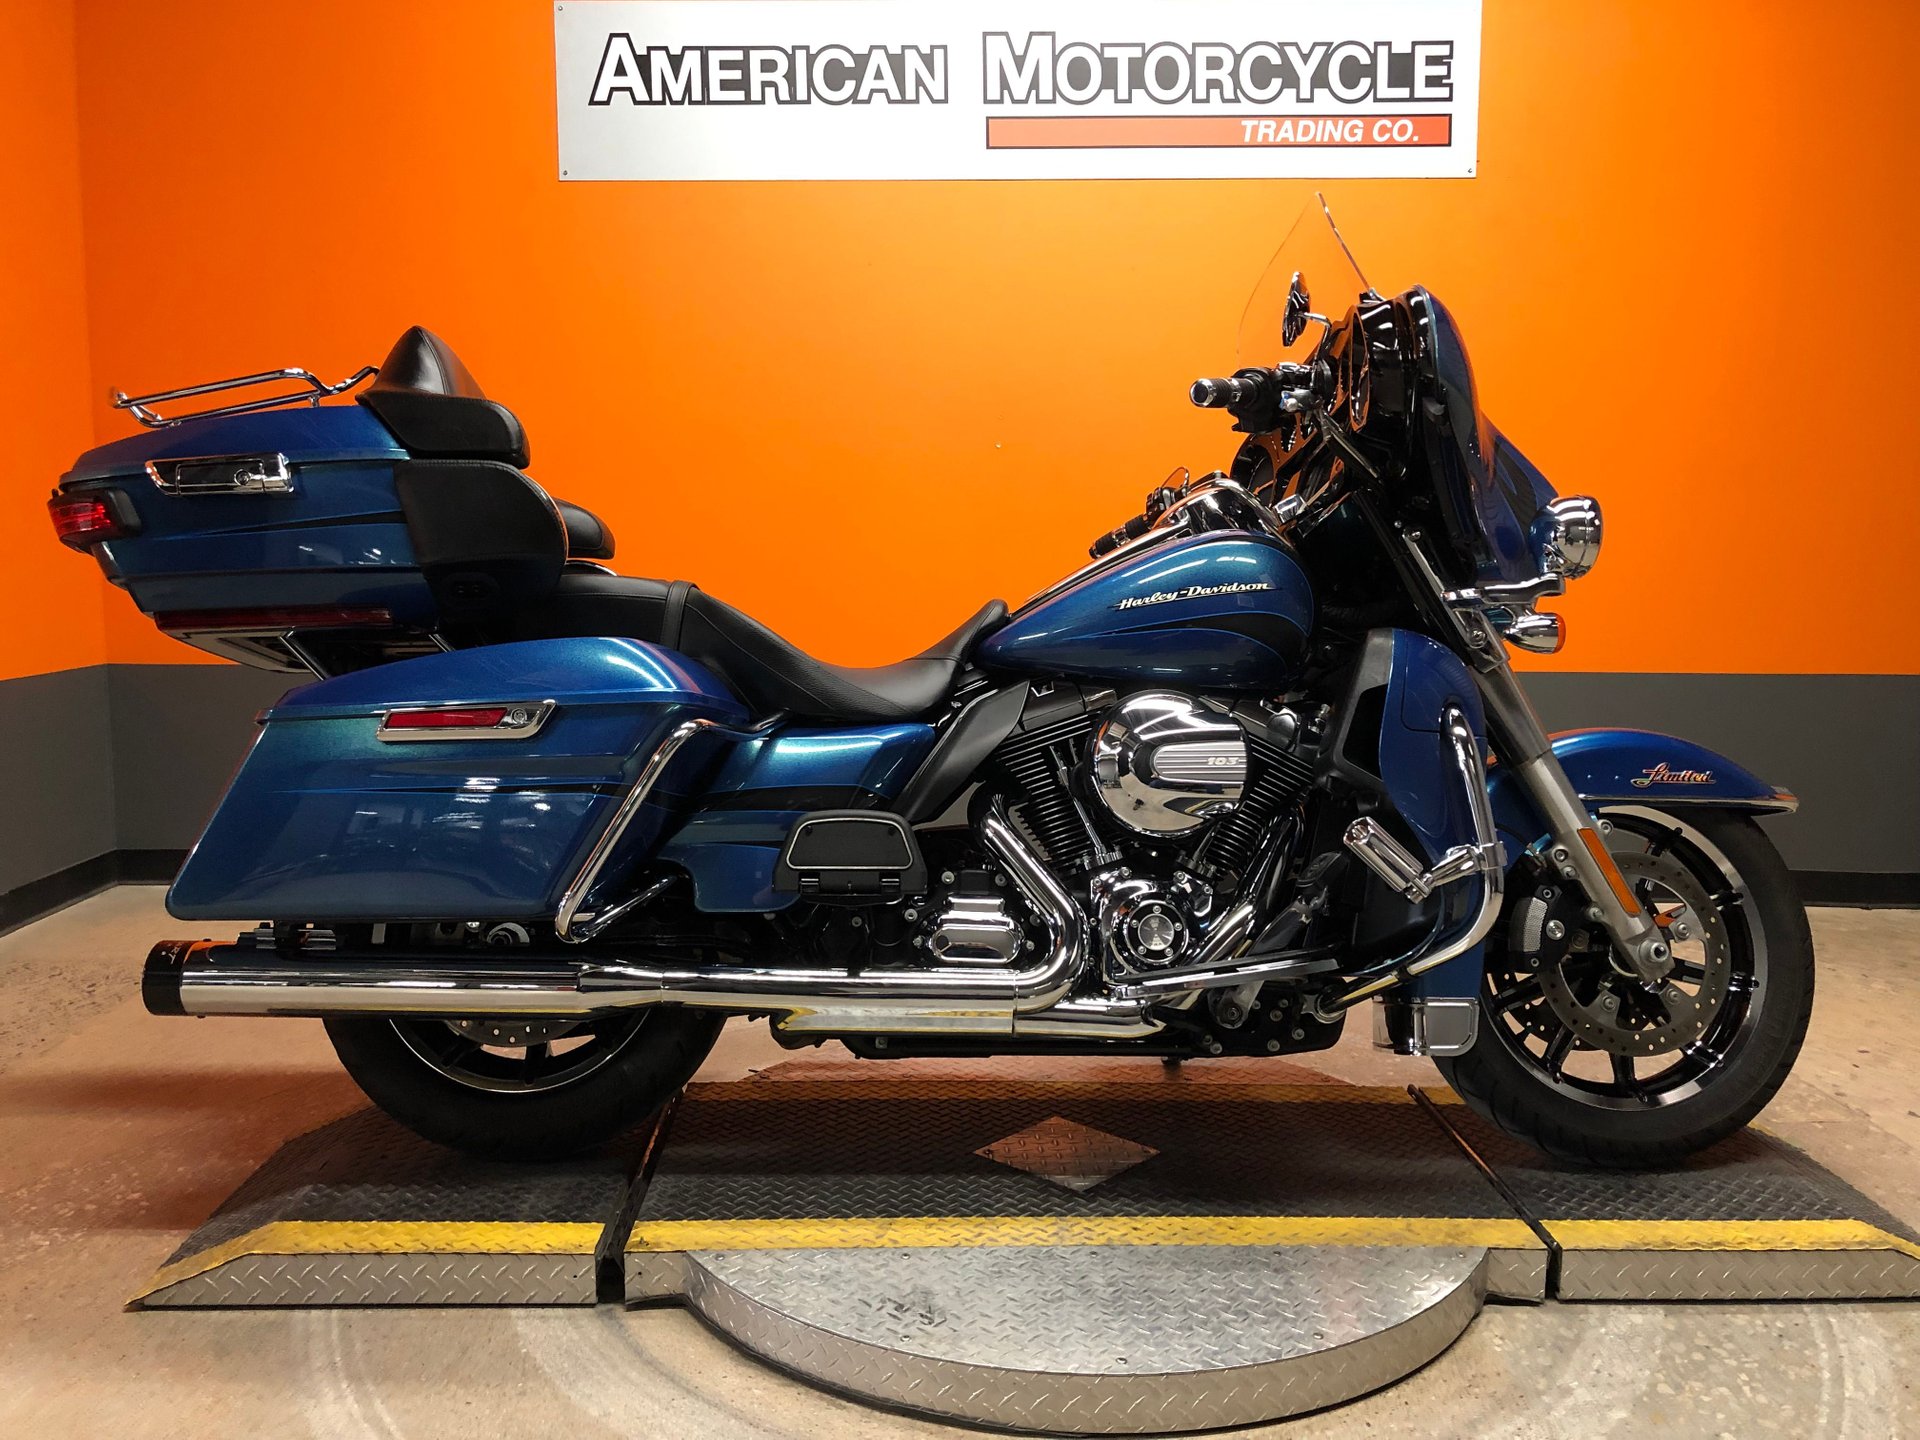 2014 Harley Davidson Ultra Limited American Motorcycle Trading Company Used Harley Davidson Motorcycles